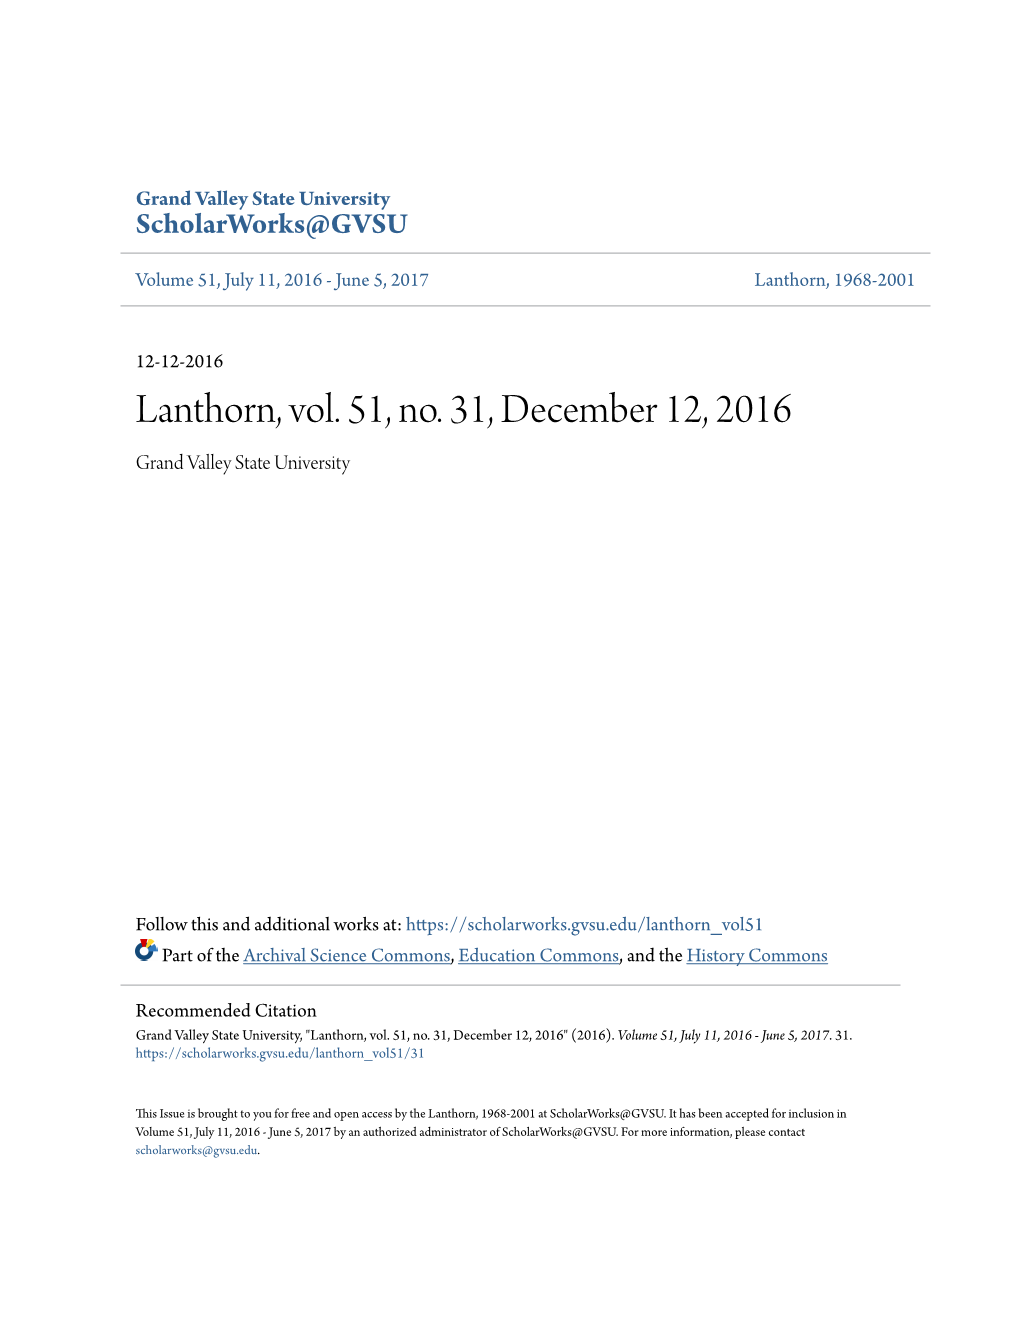 Lanthorn, Vol. 51, No. 31, December 12, 2016 Grand Valley State University